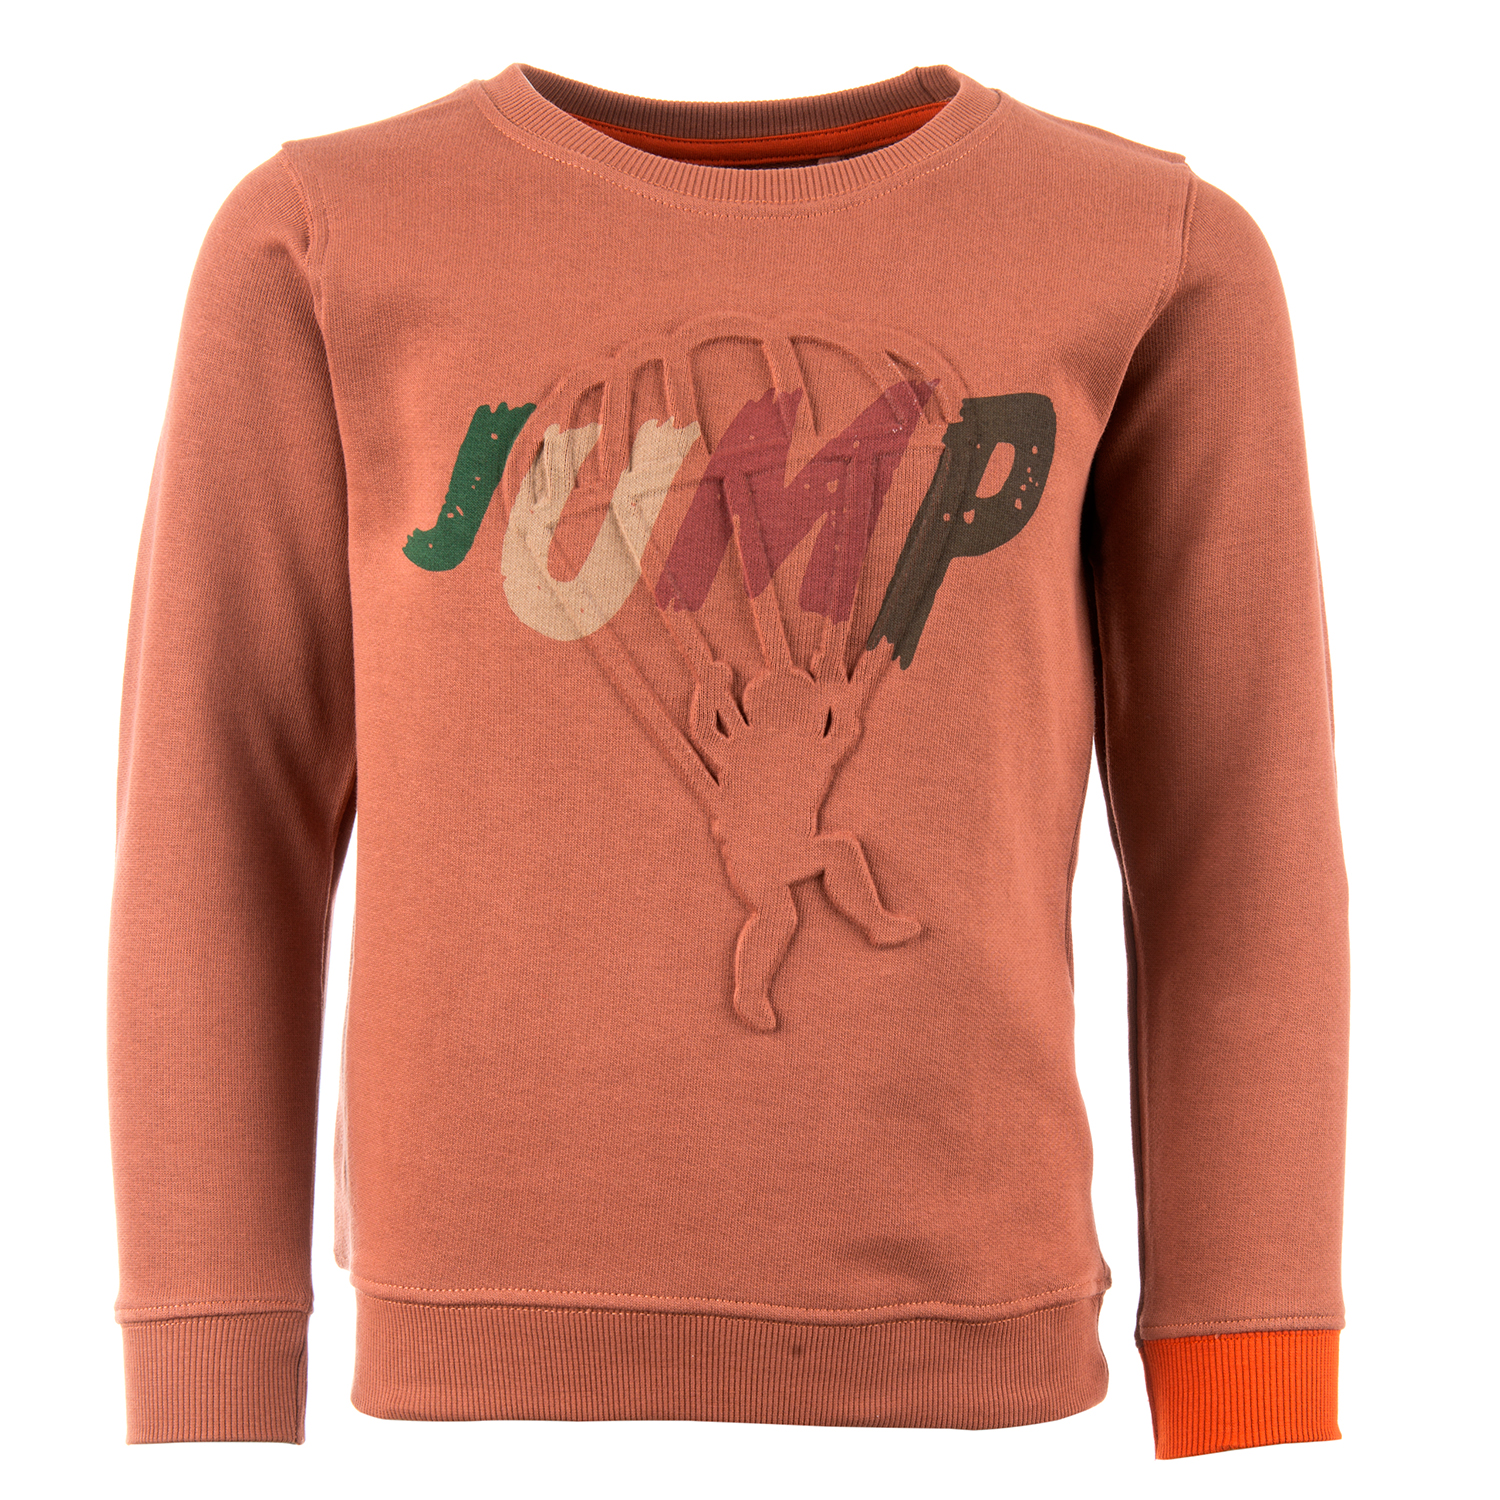 Impress - JUMP brown